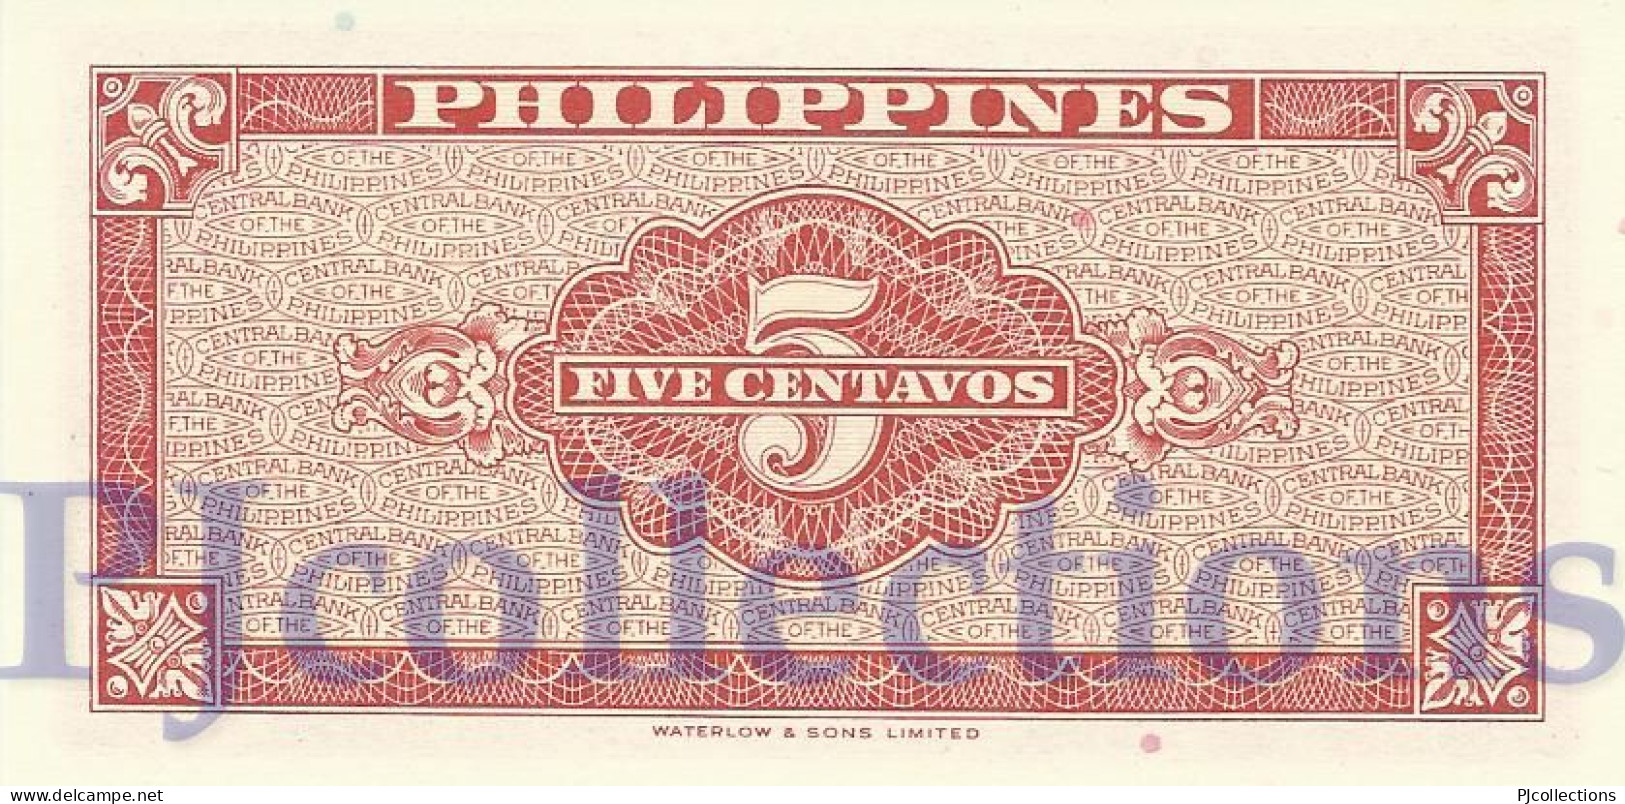 PHILIPPINES 5 CENTAVOS 1949 PICK 126a UNC - Philippines